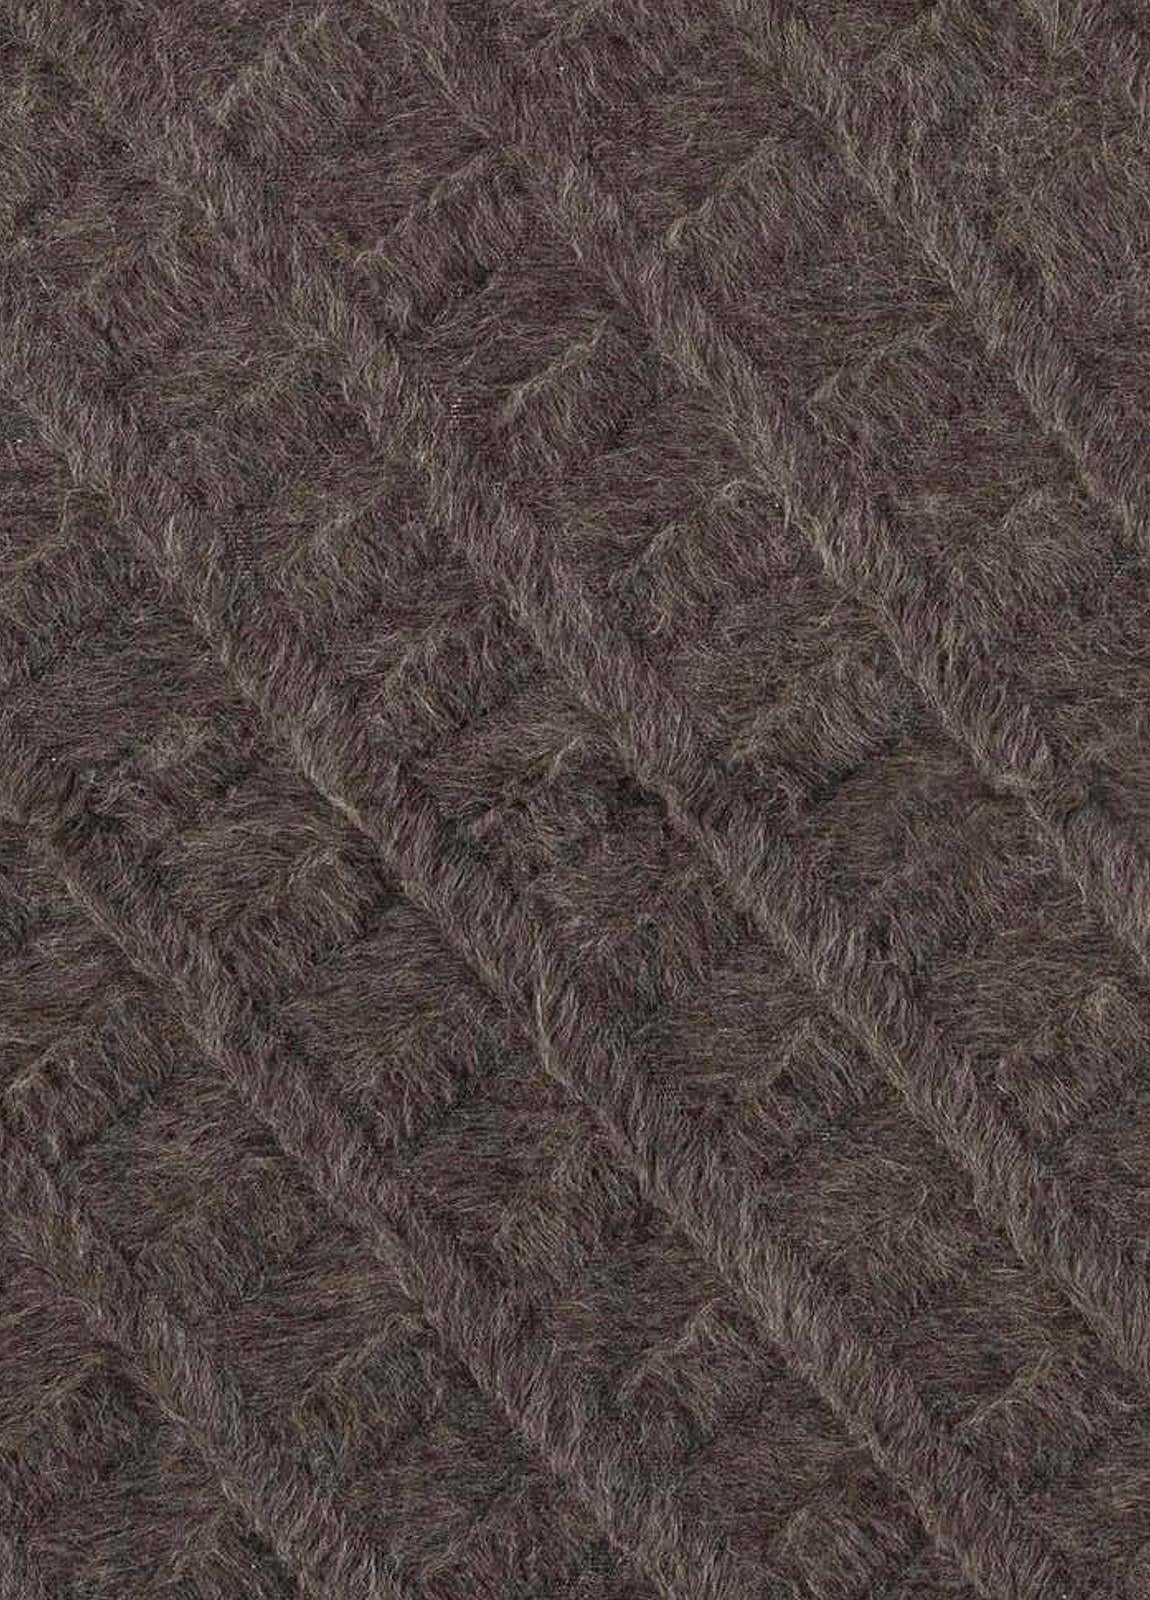 Taurus Collection Modern geometric goat hair rug by Doris Leslie Blau.
Size: 6'2